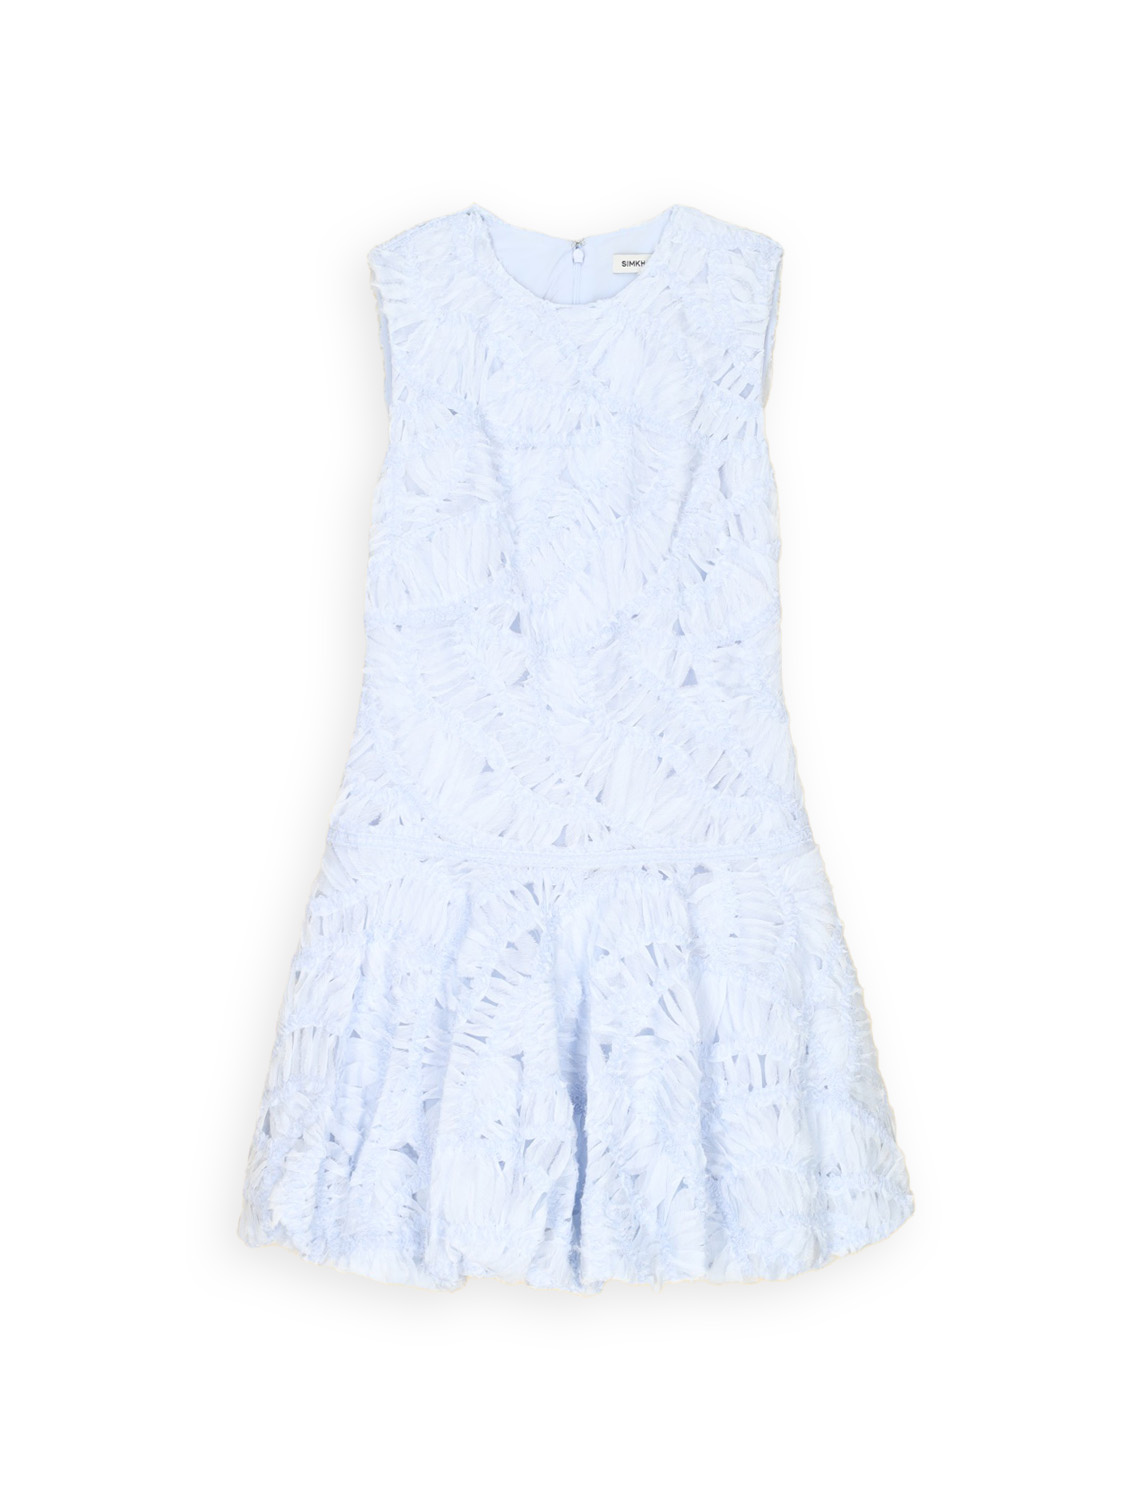 Simkhai Vallan – Mini dress with delicate lace   blue 38